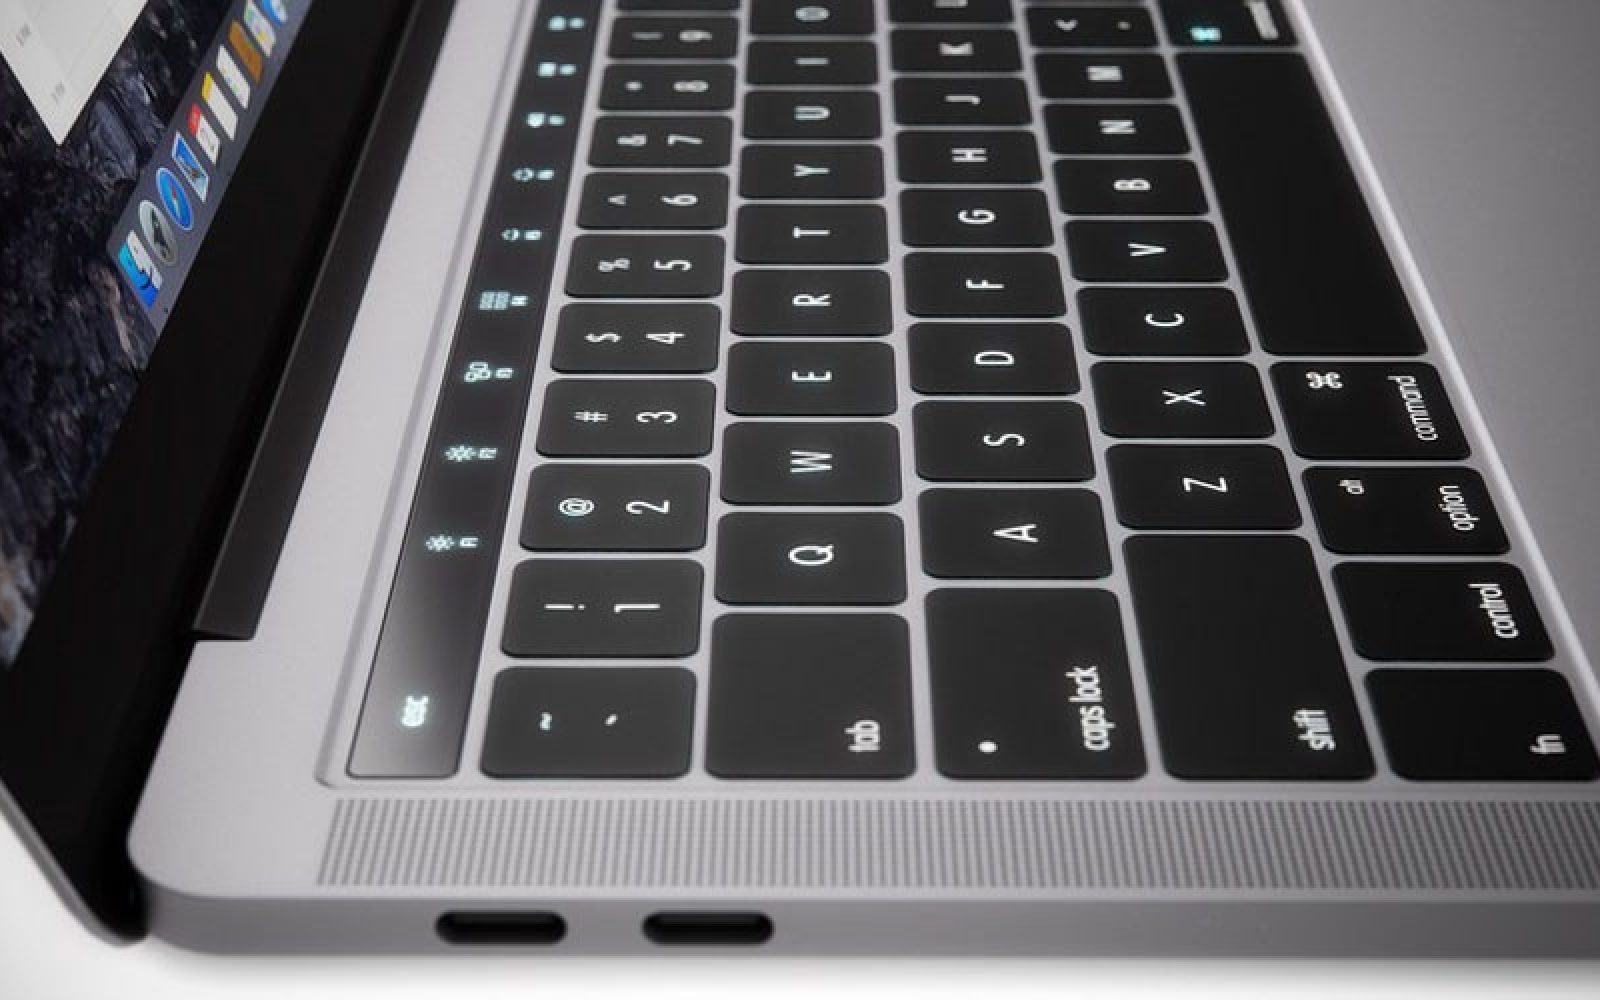 New macbook pro power off button